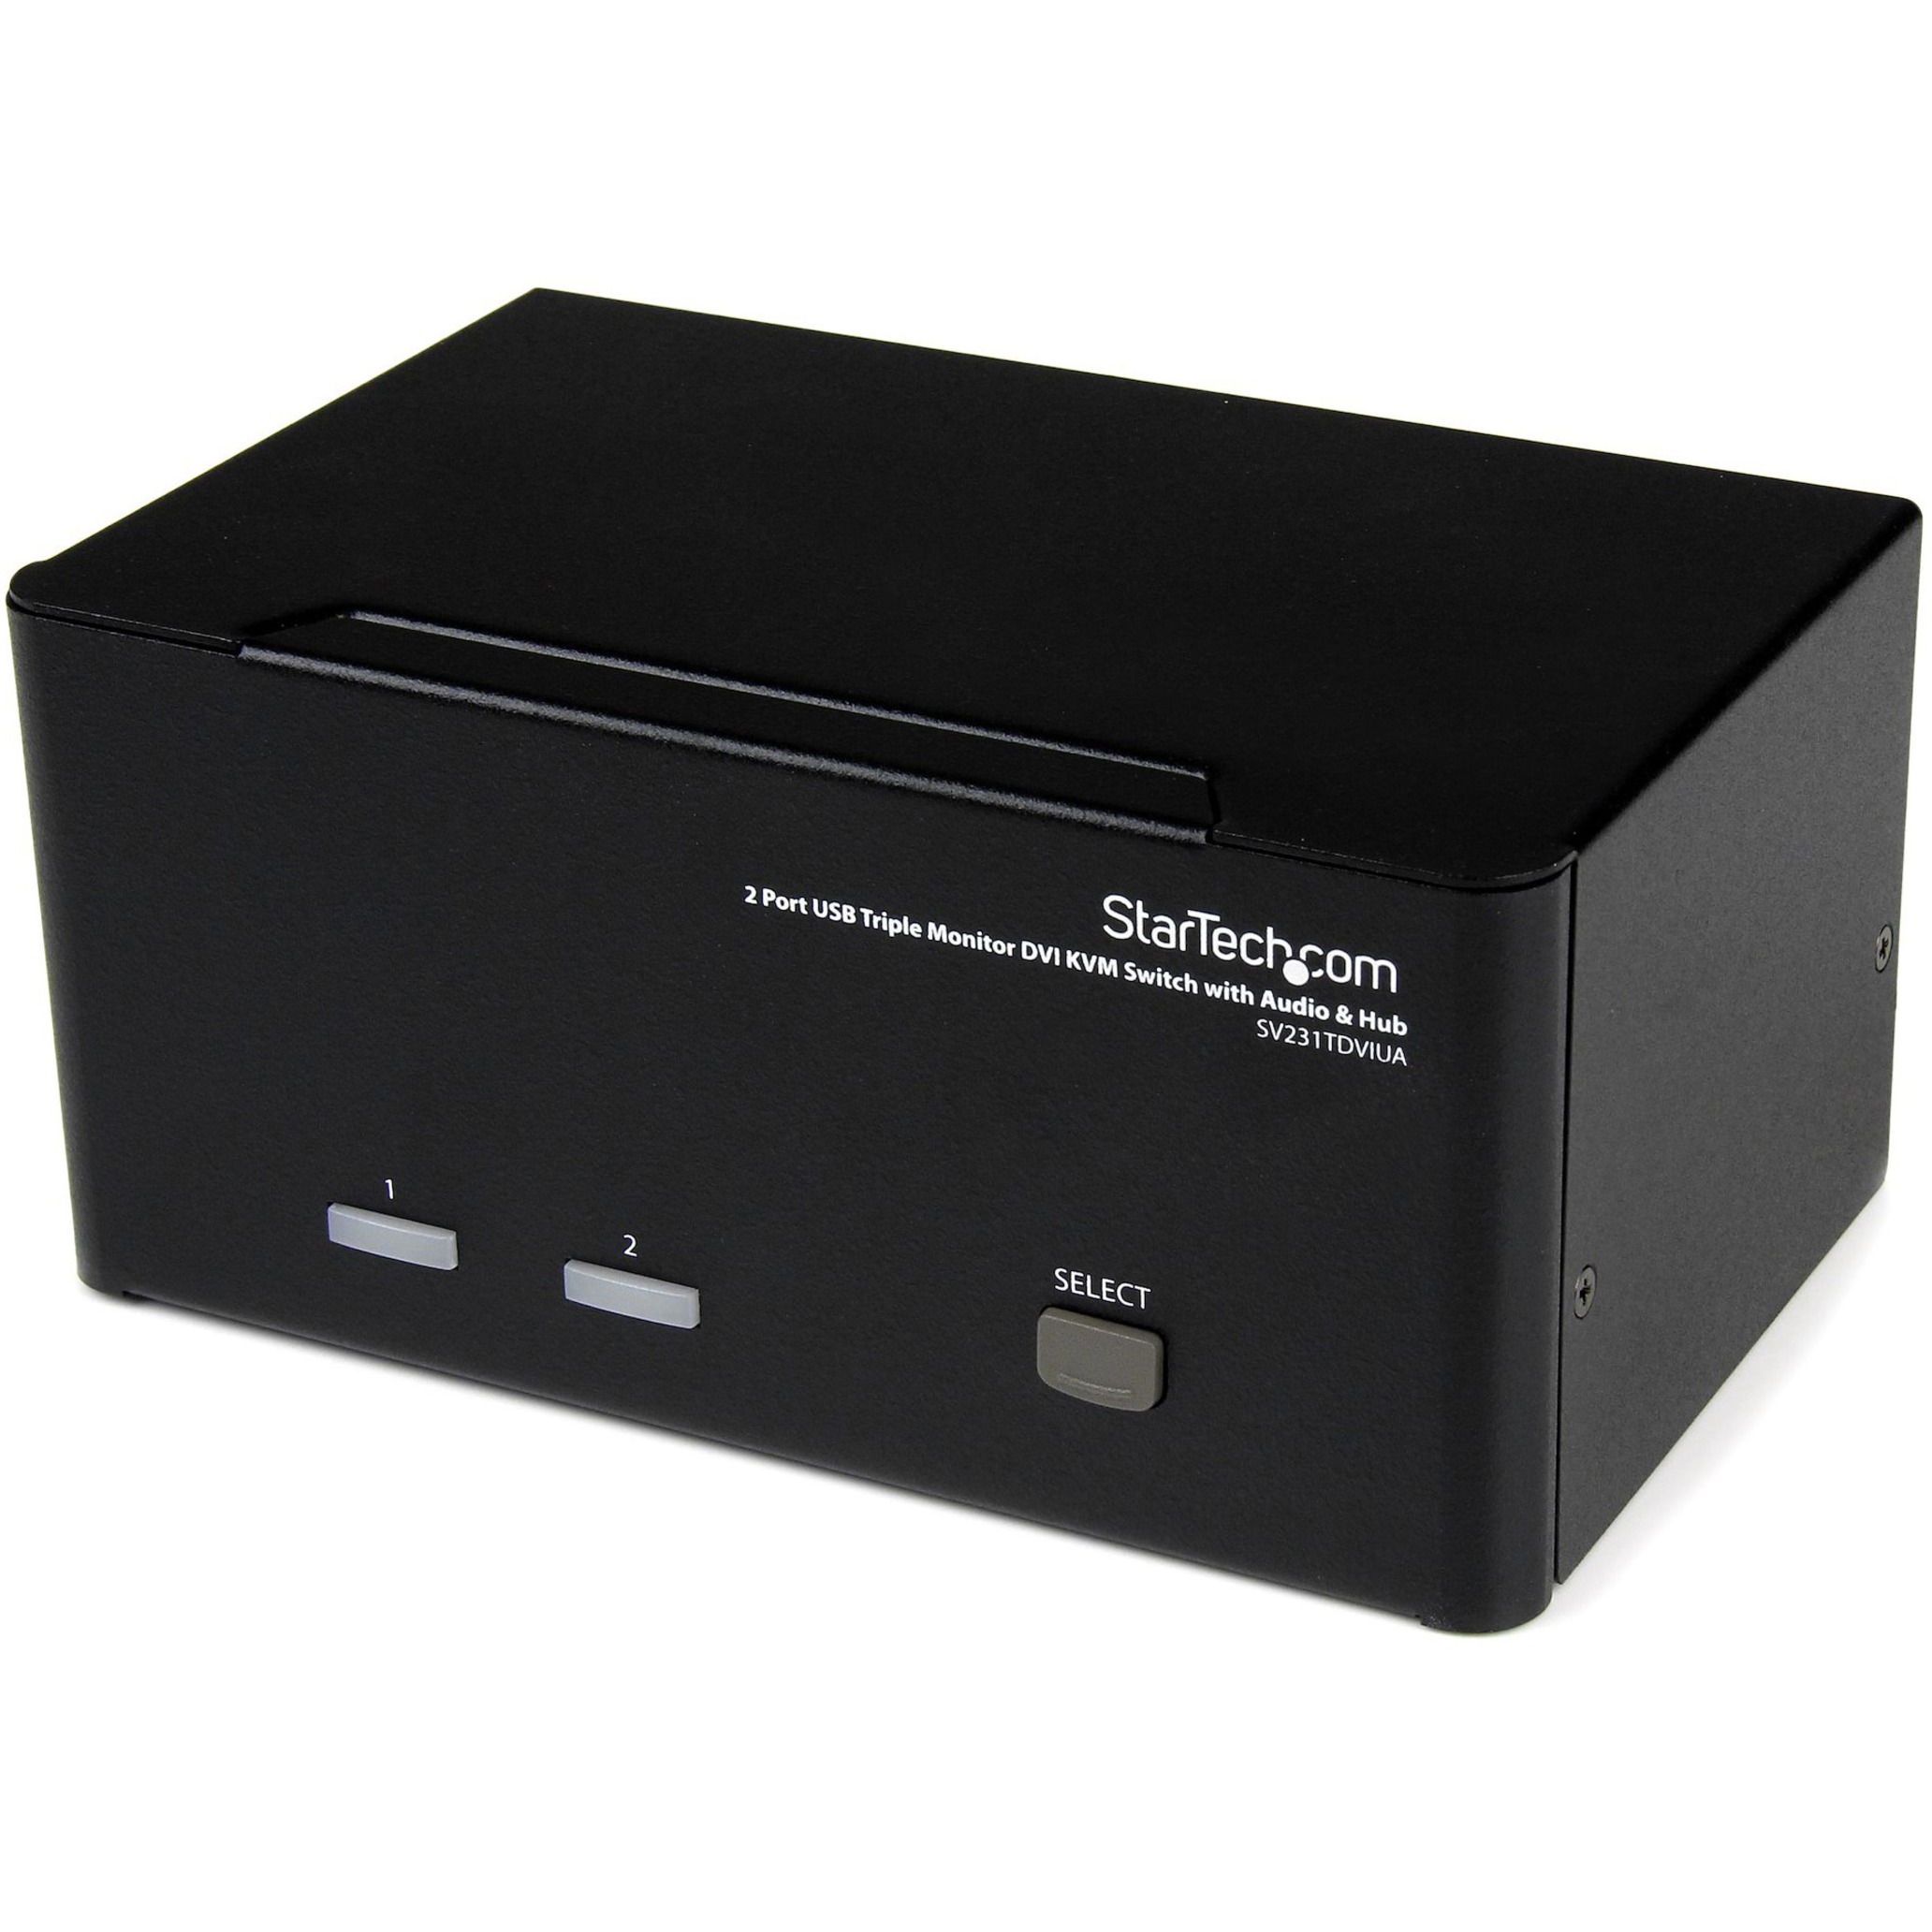 StarTech.com 2 Port Triple Monitor DVI USB KVM Switch with Audio & USB 2.0 Hub - image 1 of 3